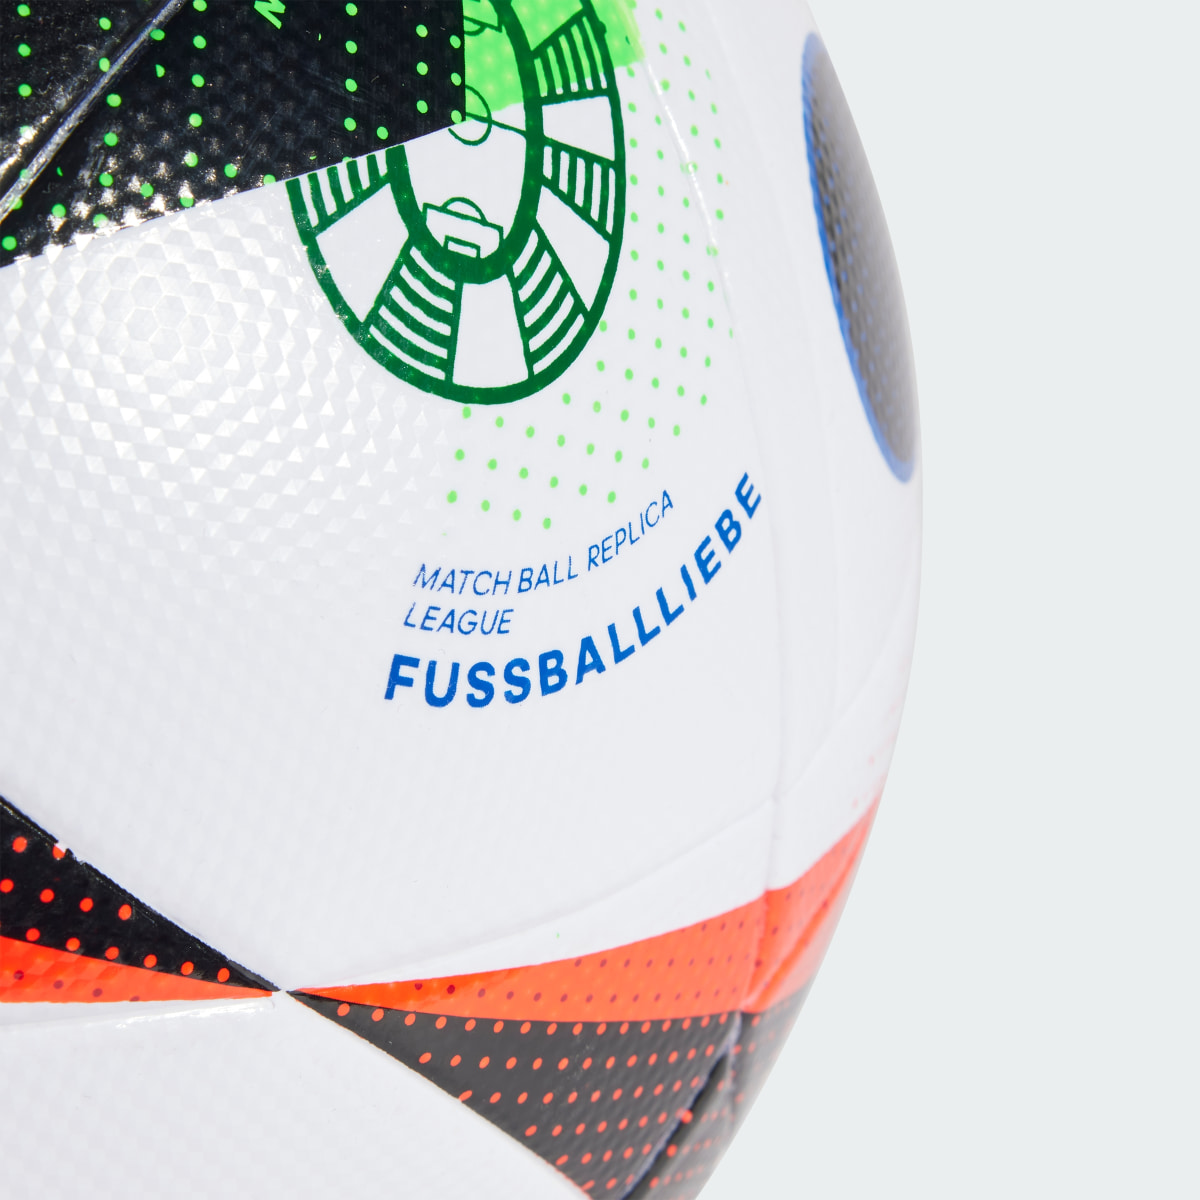 Adidas Fussballliebe League Football. 4